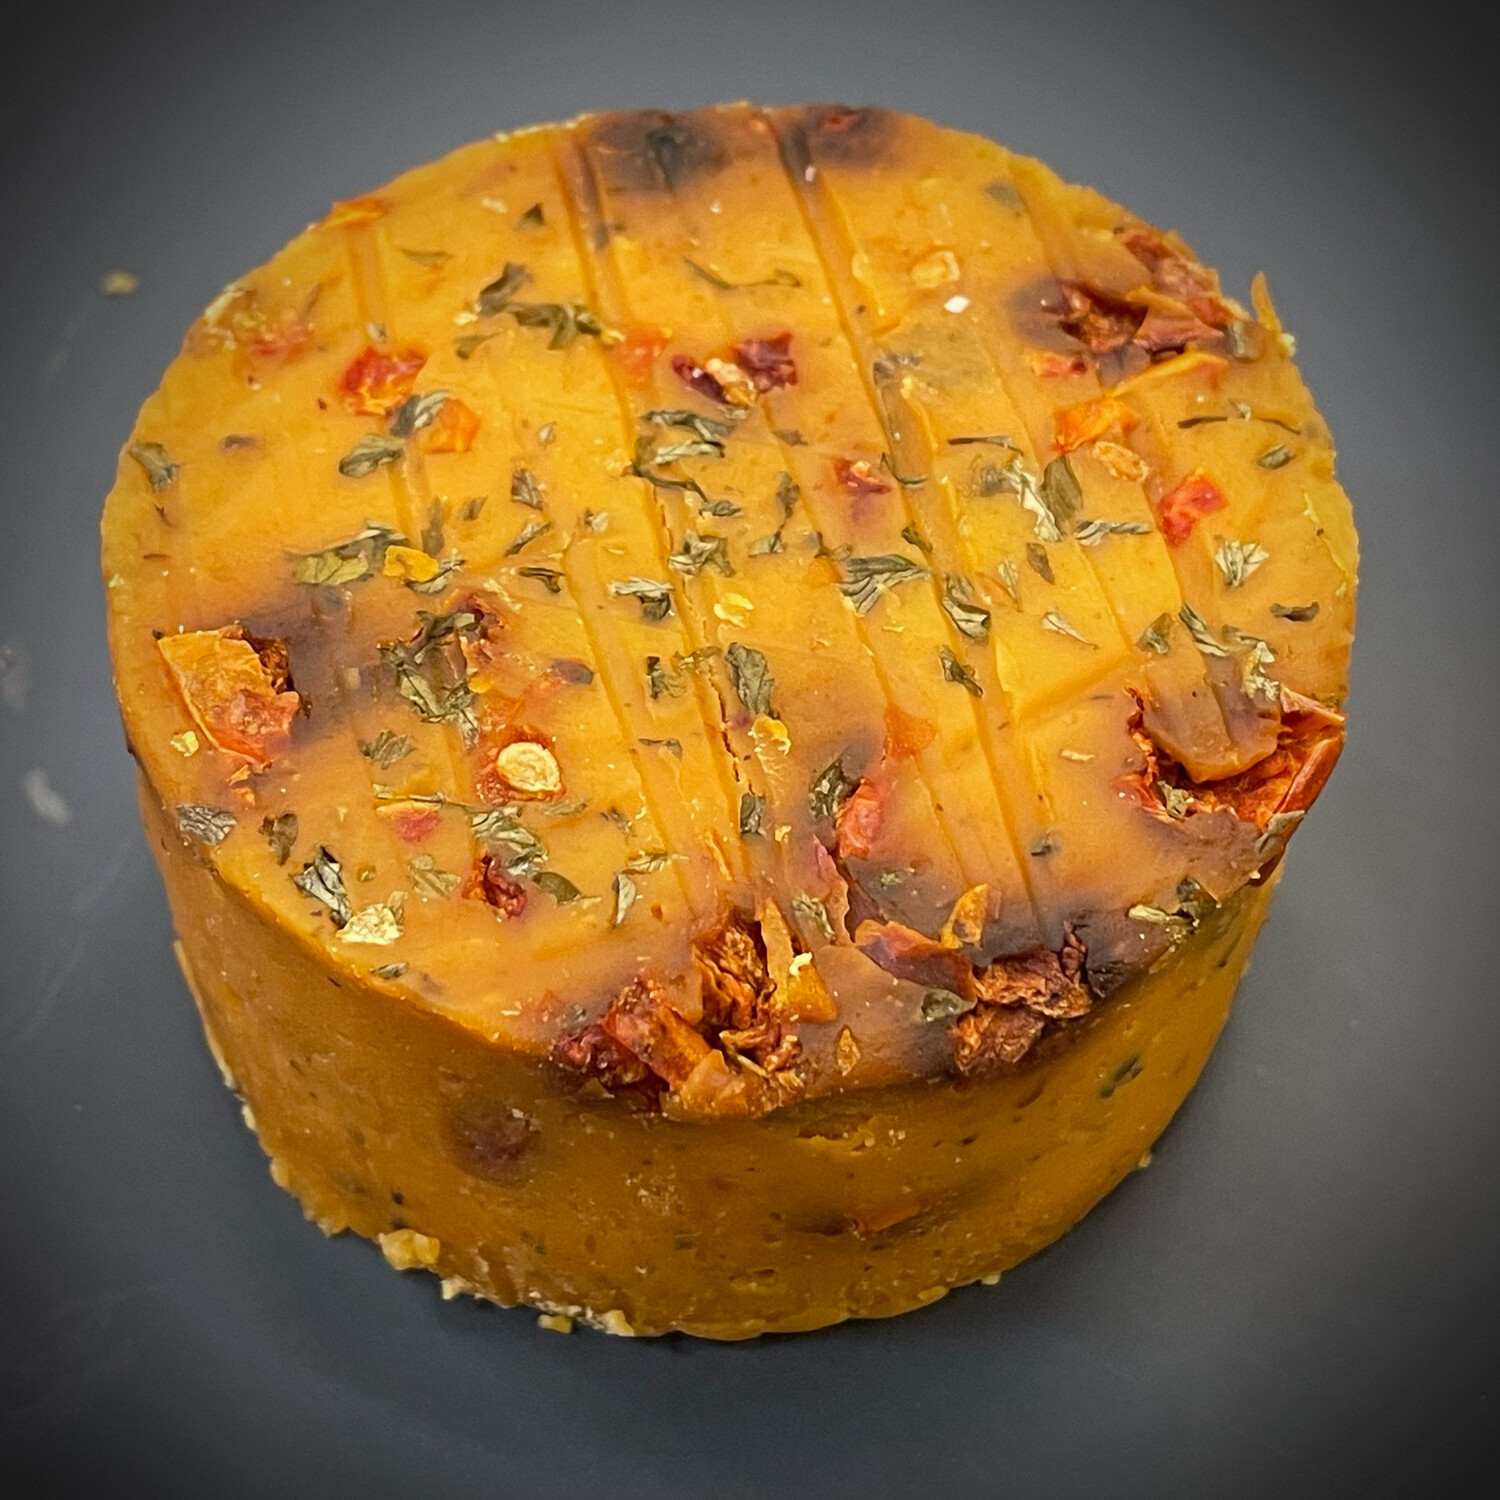 Artisan LIMITED RELEASE Heirloom Tomato Vegan Cheese